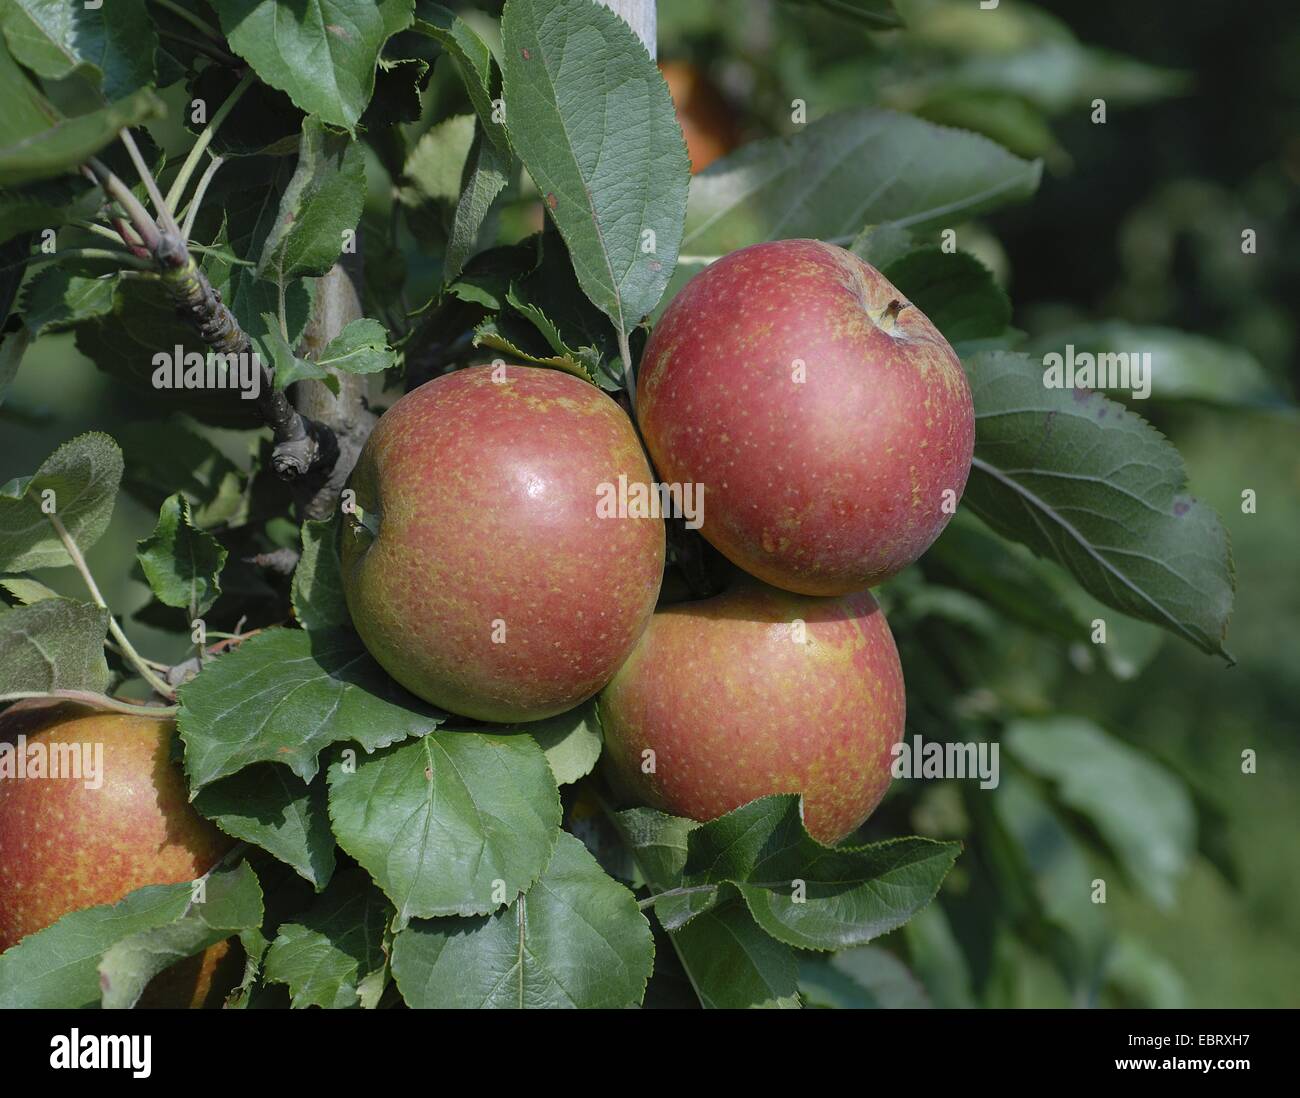 apple tree (Malus domestica 'Spurkoop', Malus domestica Spurkoop), cultivar Spurkoop, apples on a tree Stock Photo